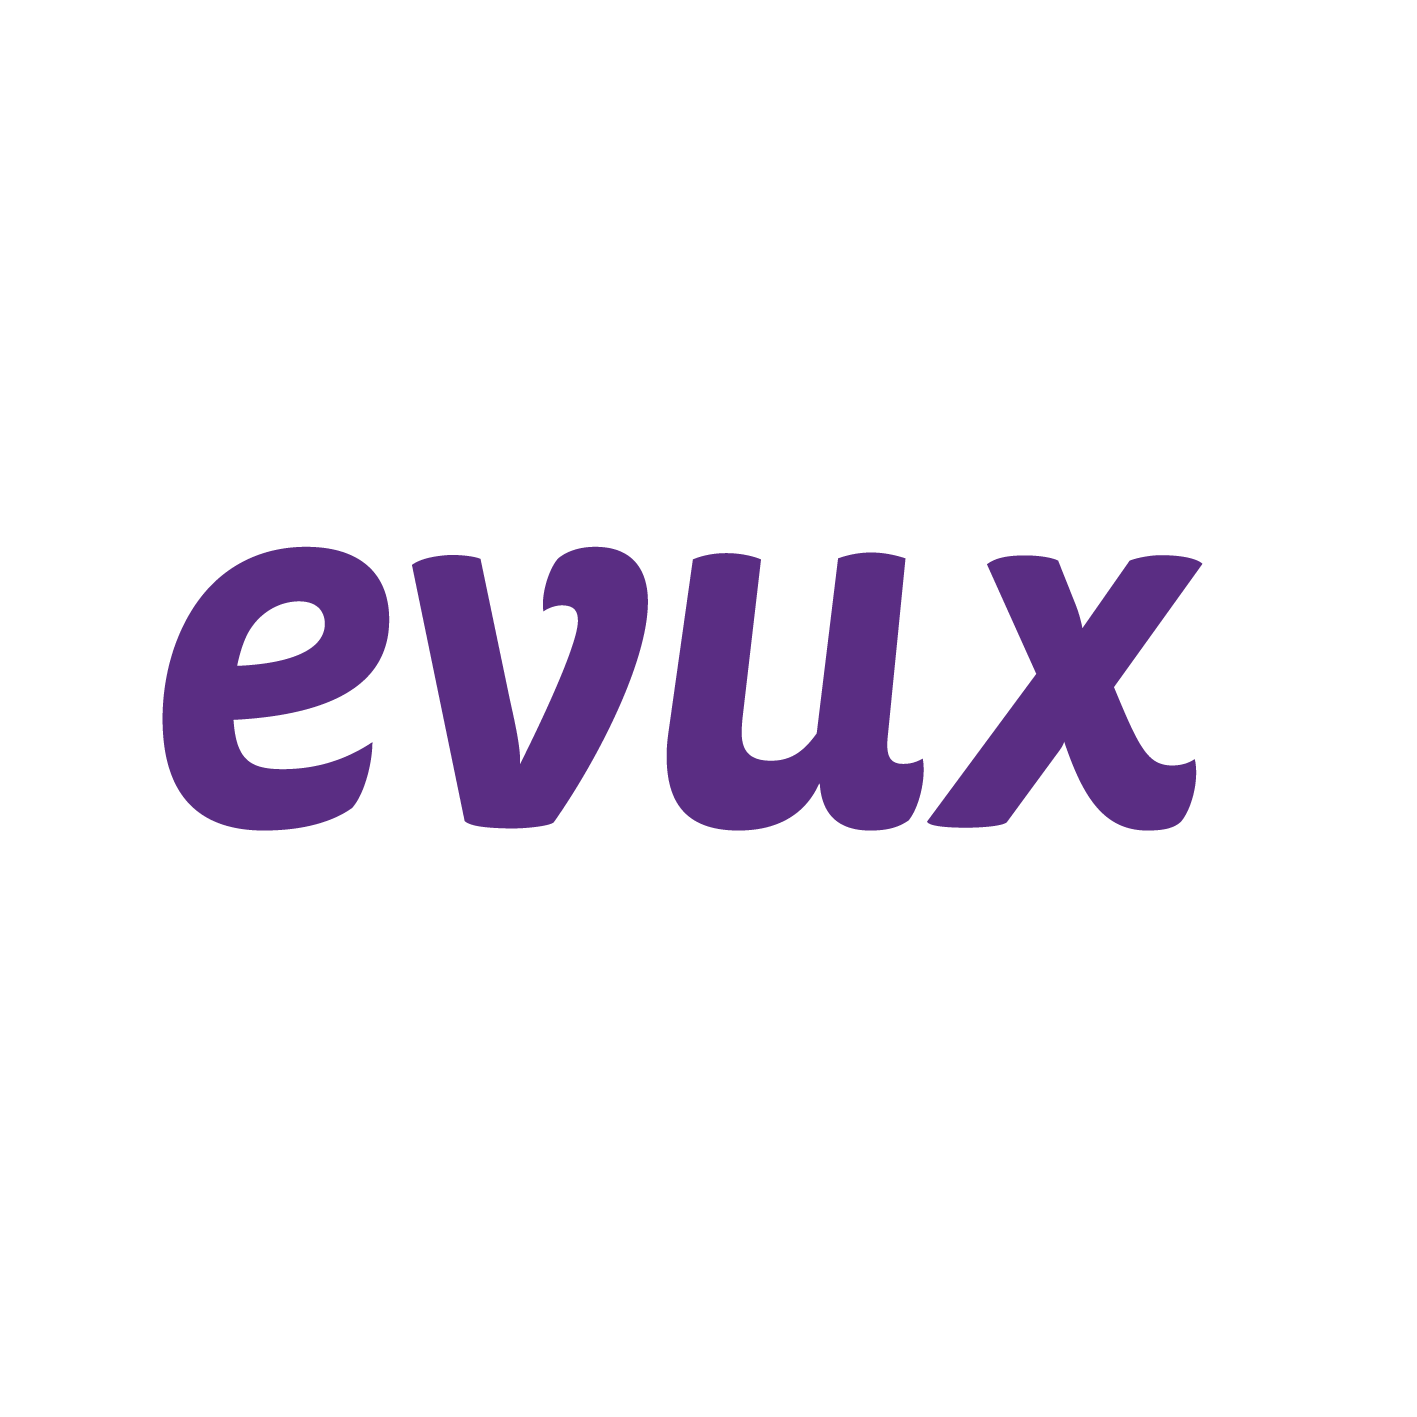 evux logo